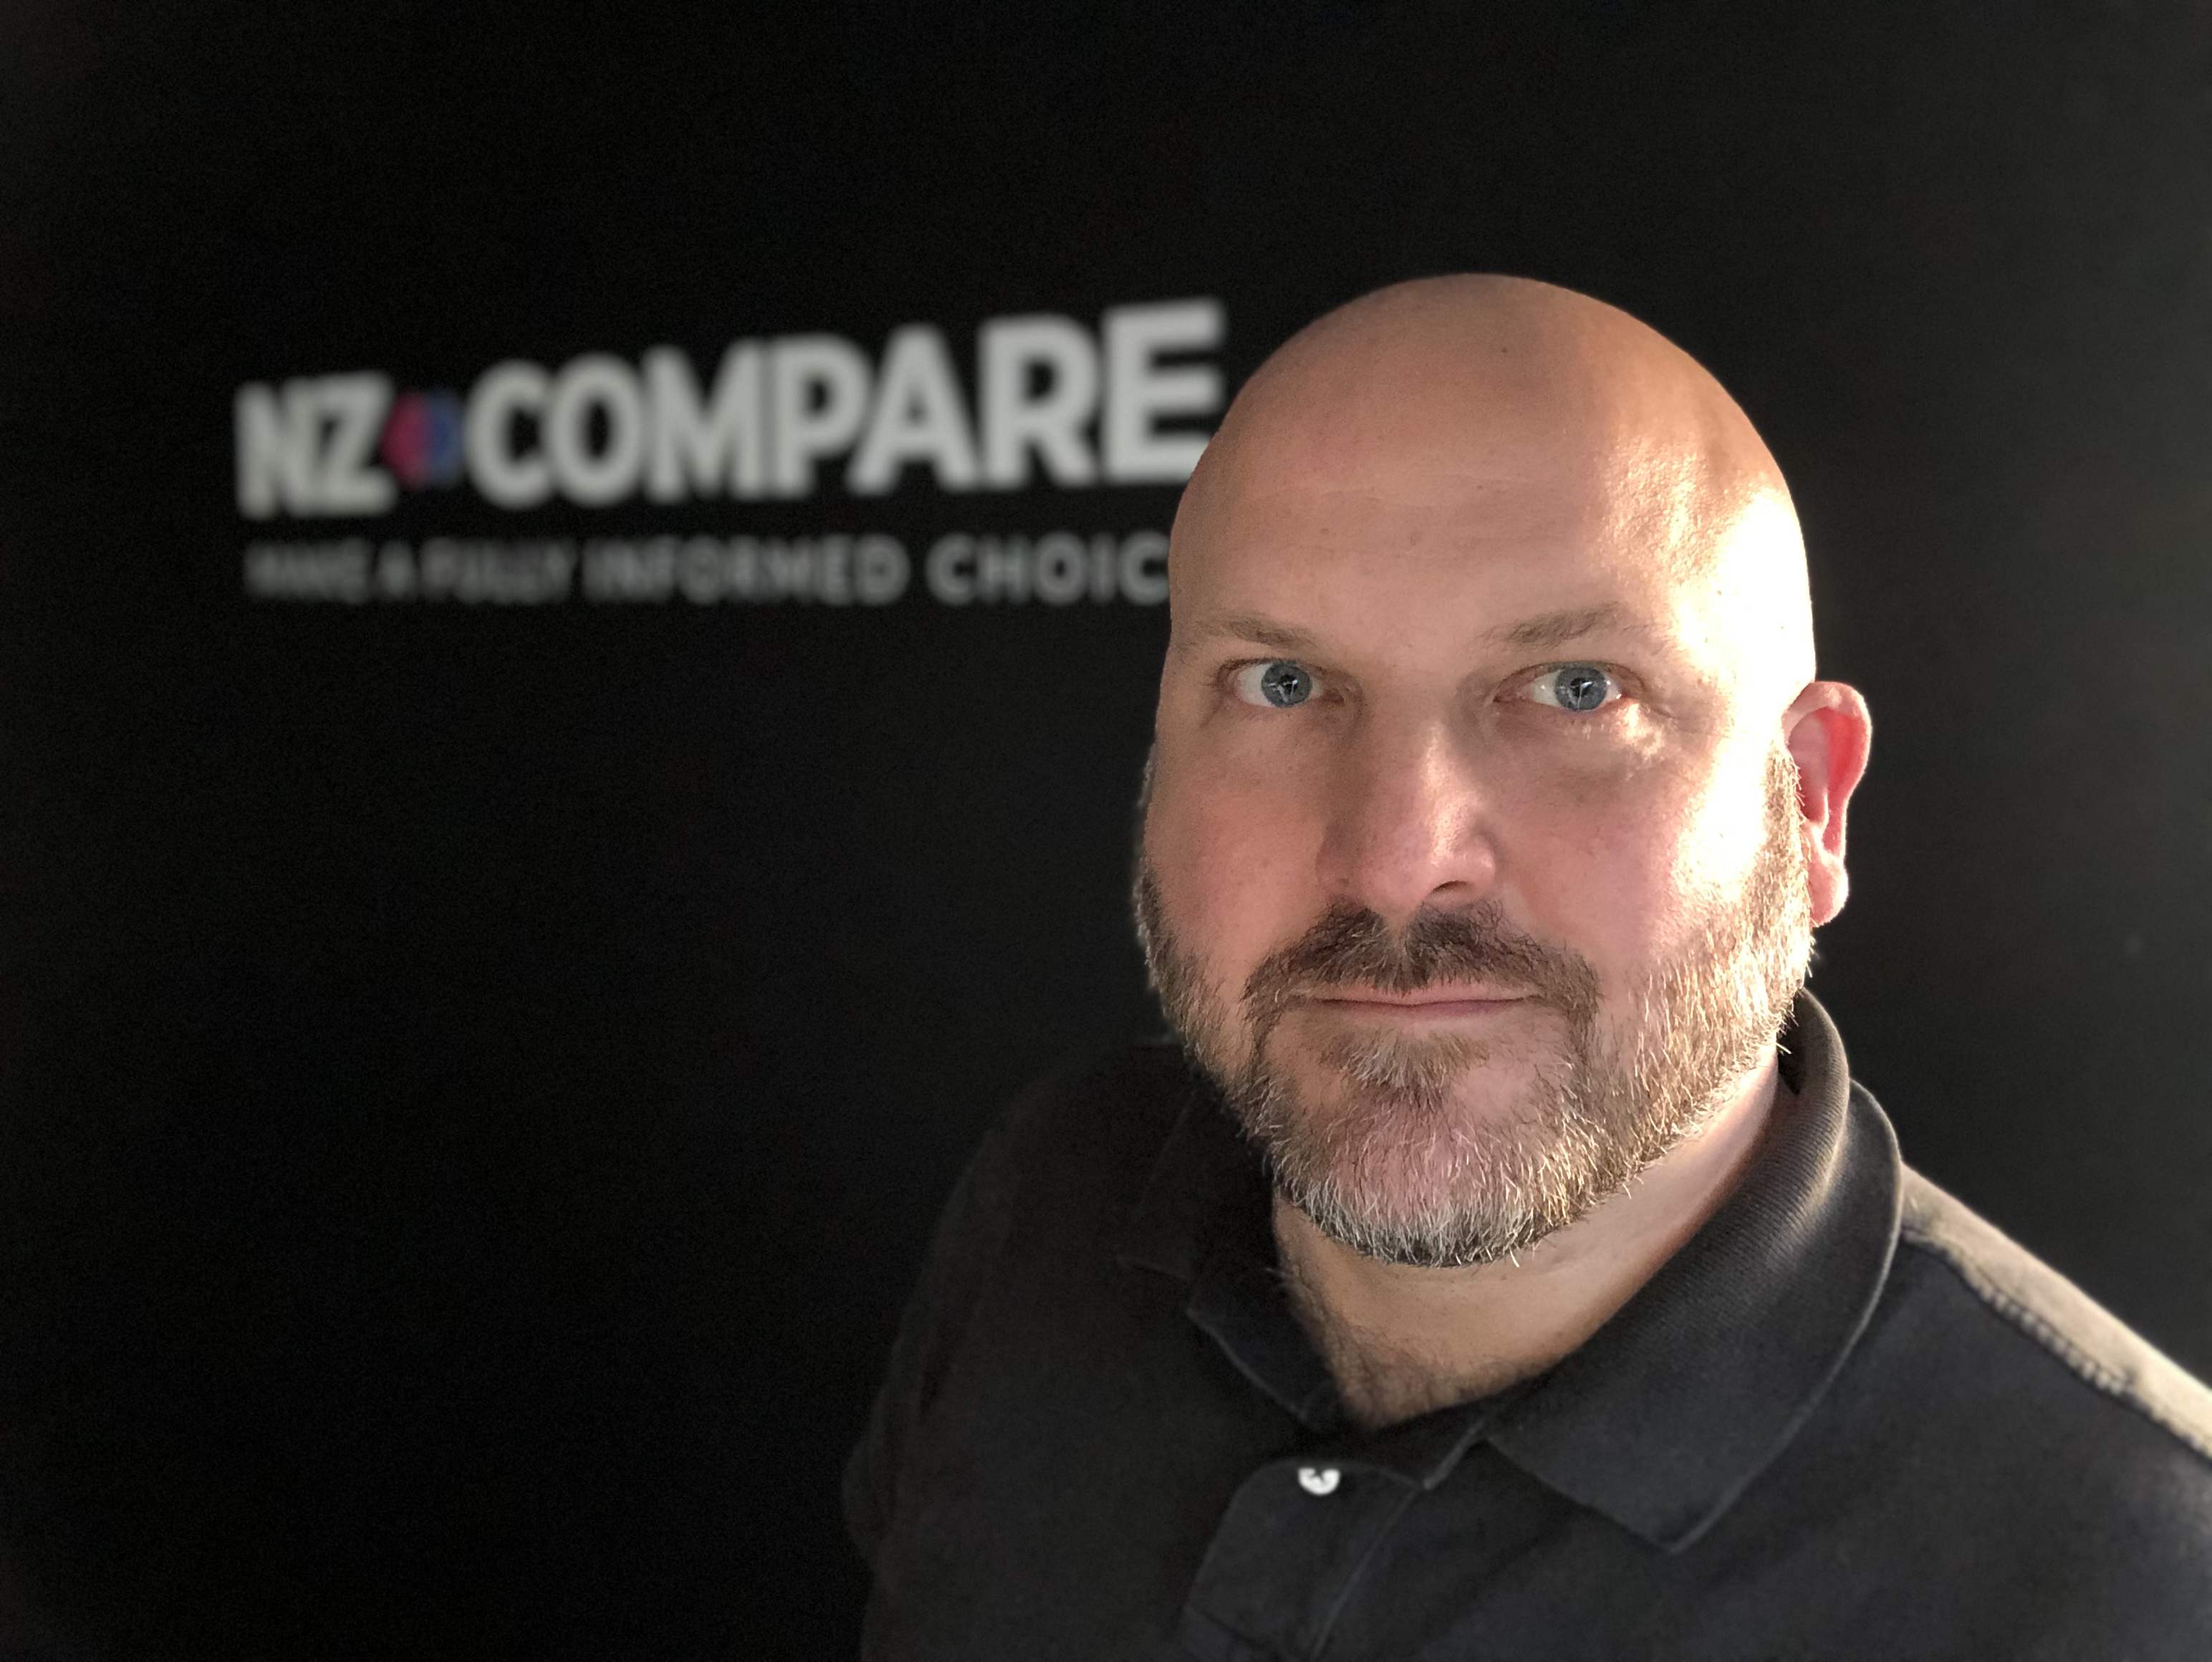 NZ Compare Group CEO Gavin Male